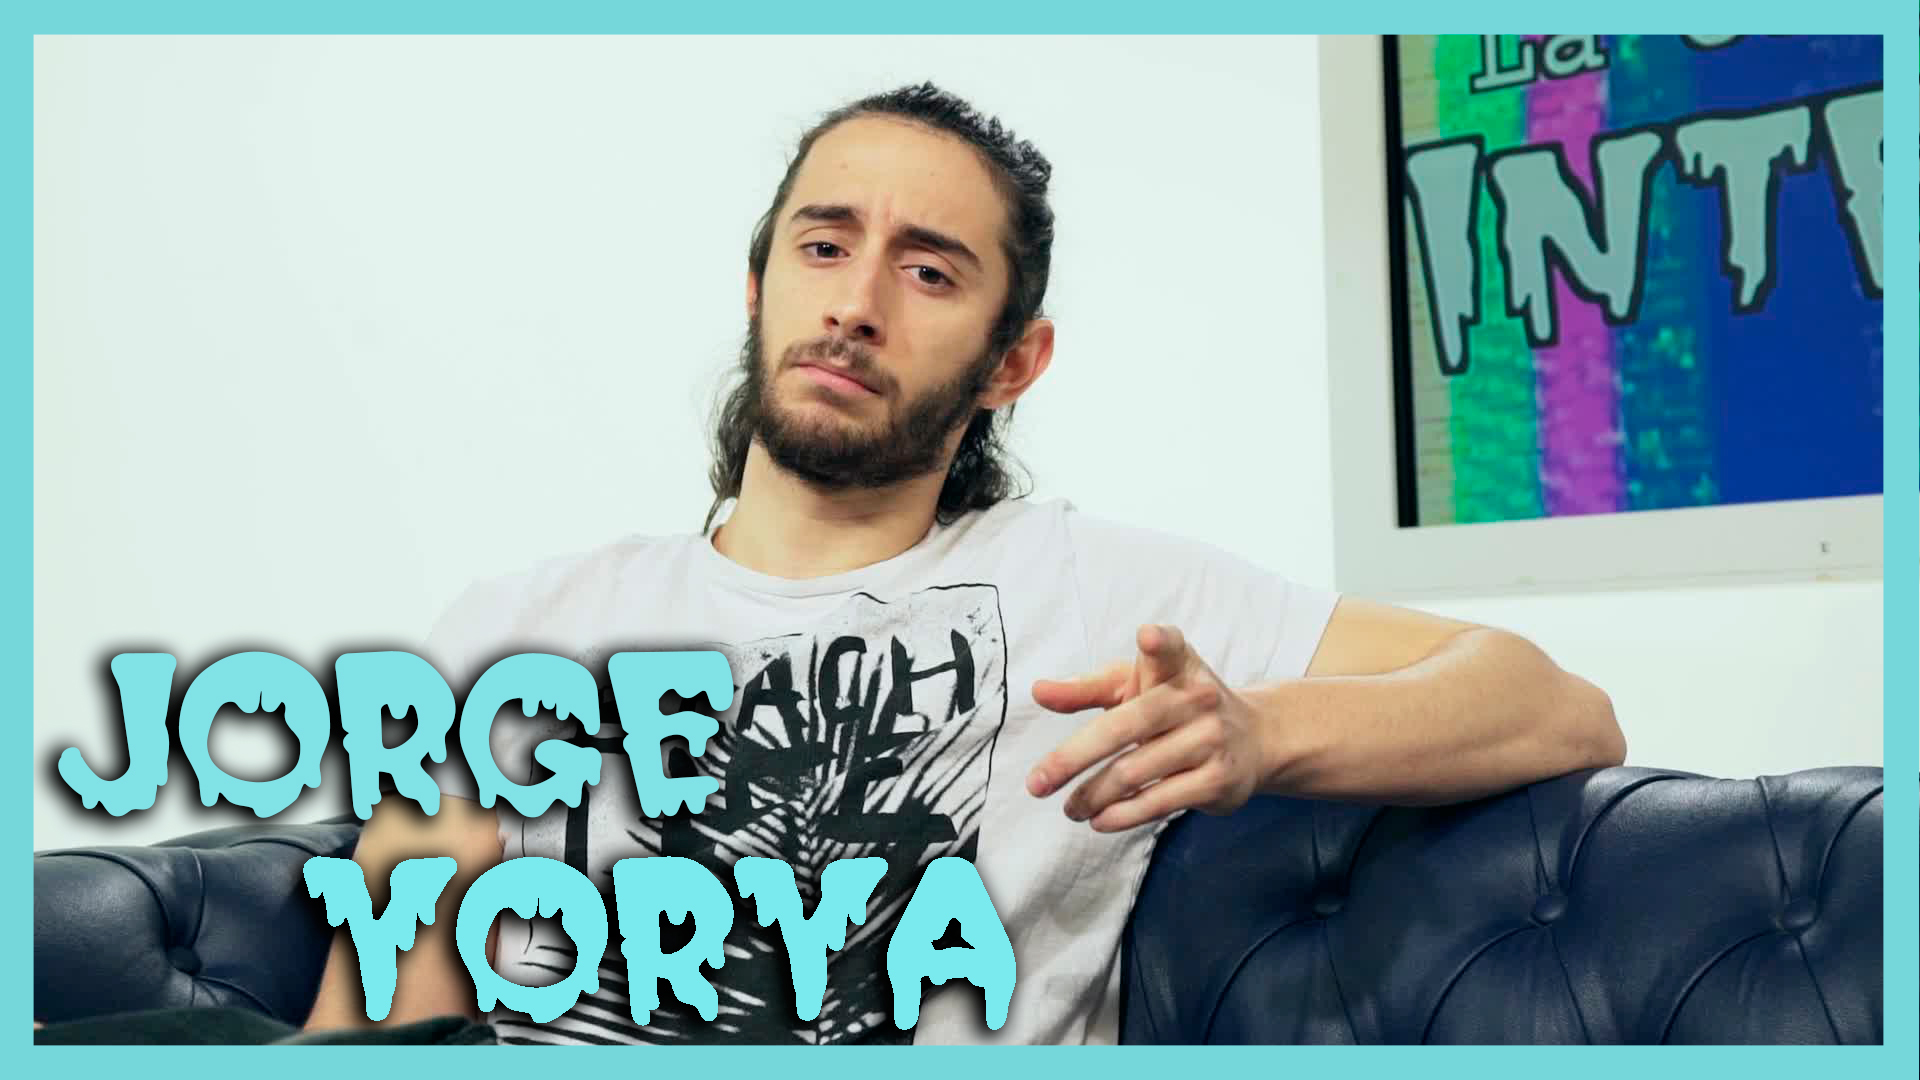 Temporada 1 Jorge Yorya: Los referentes frikis están de moda